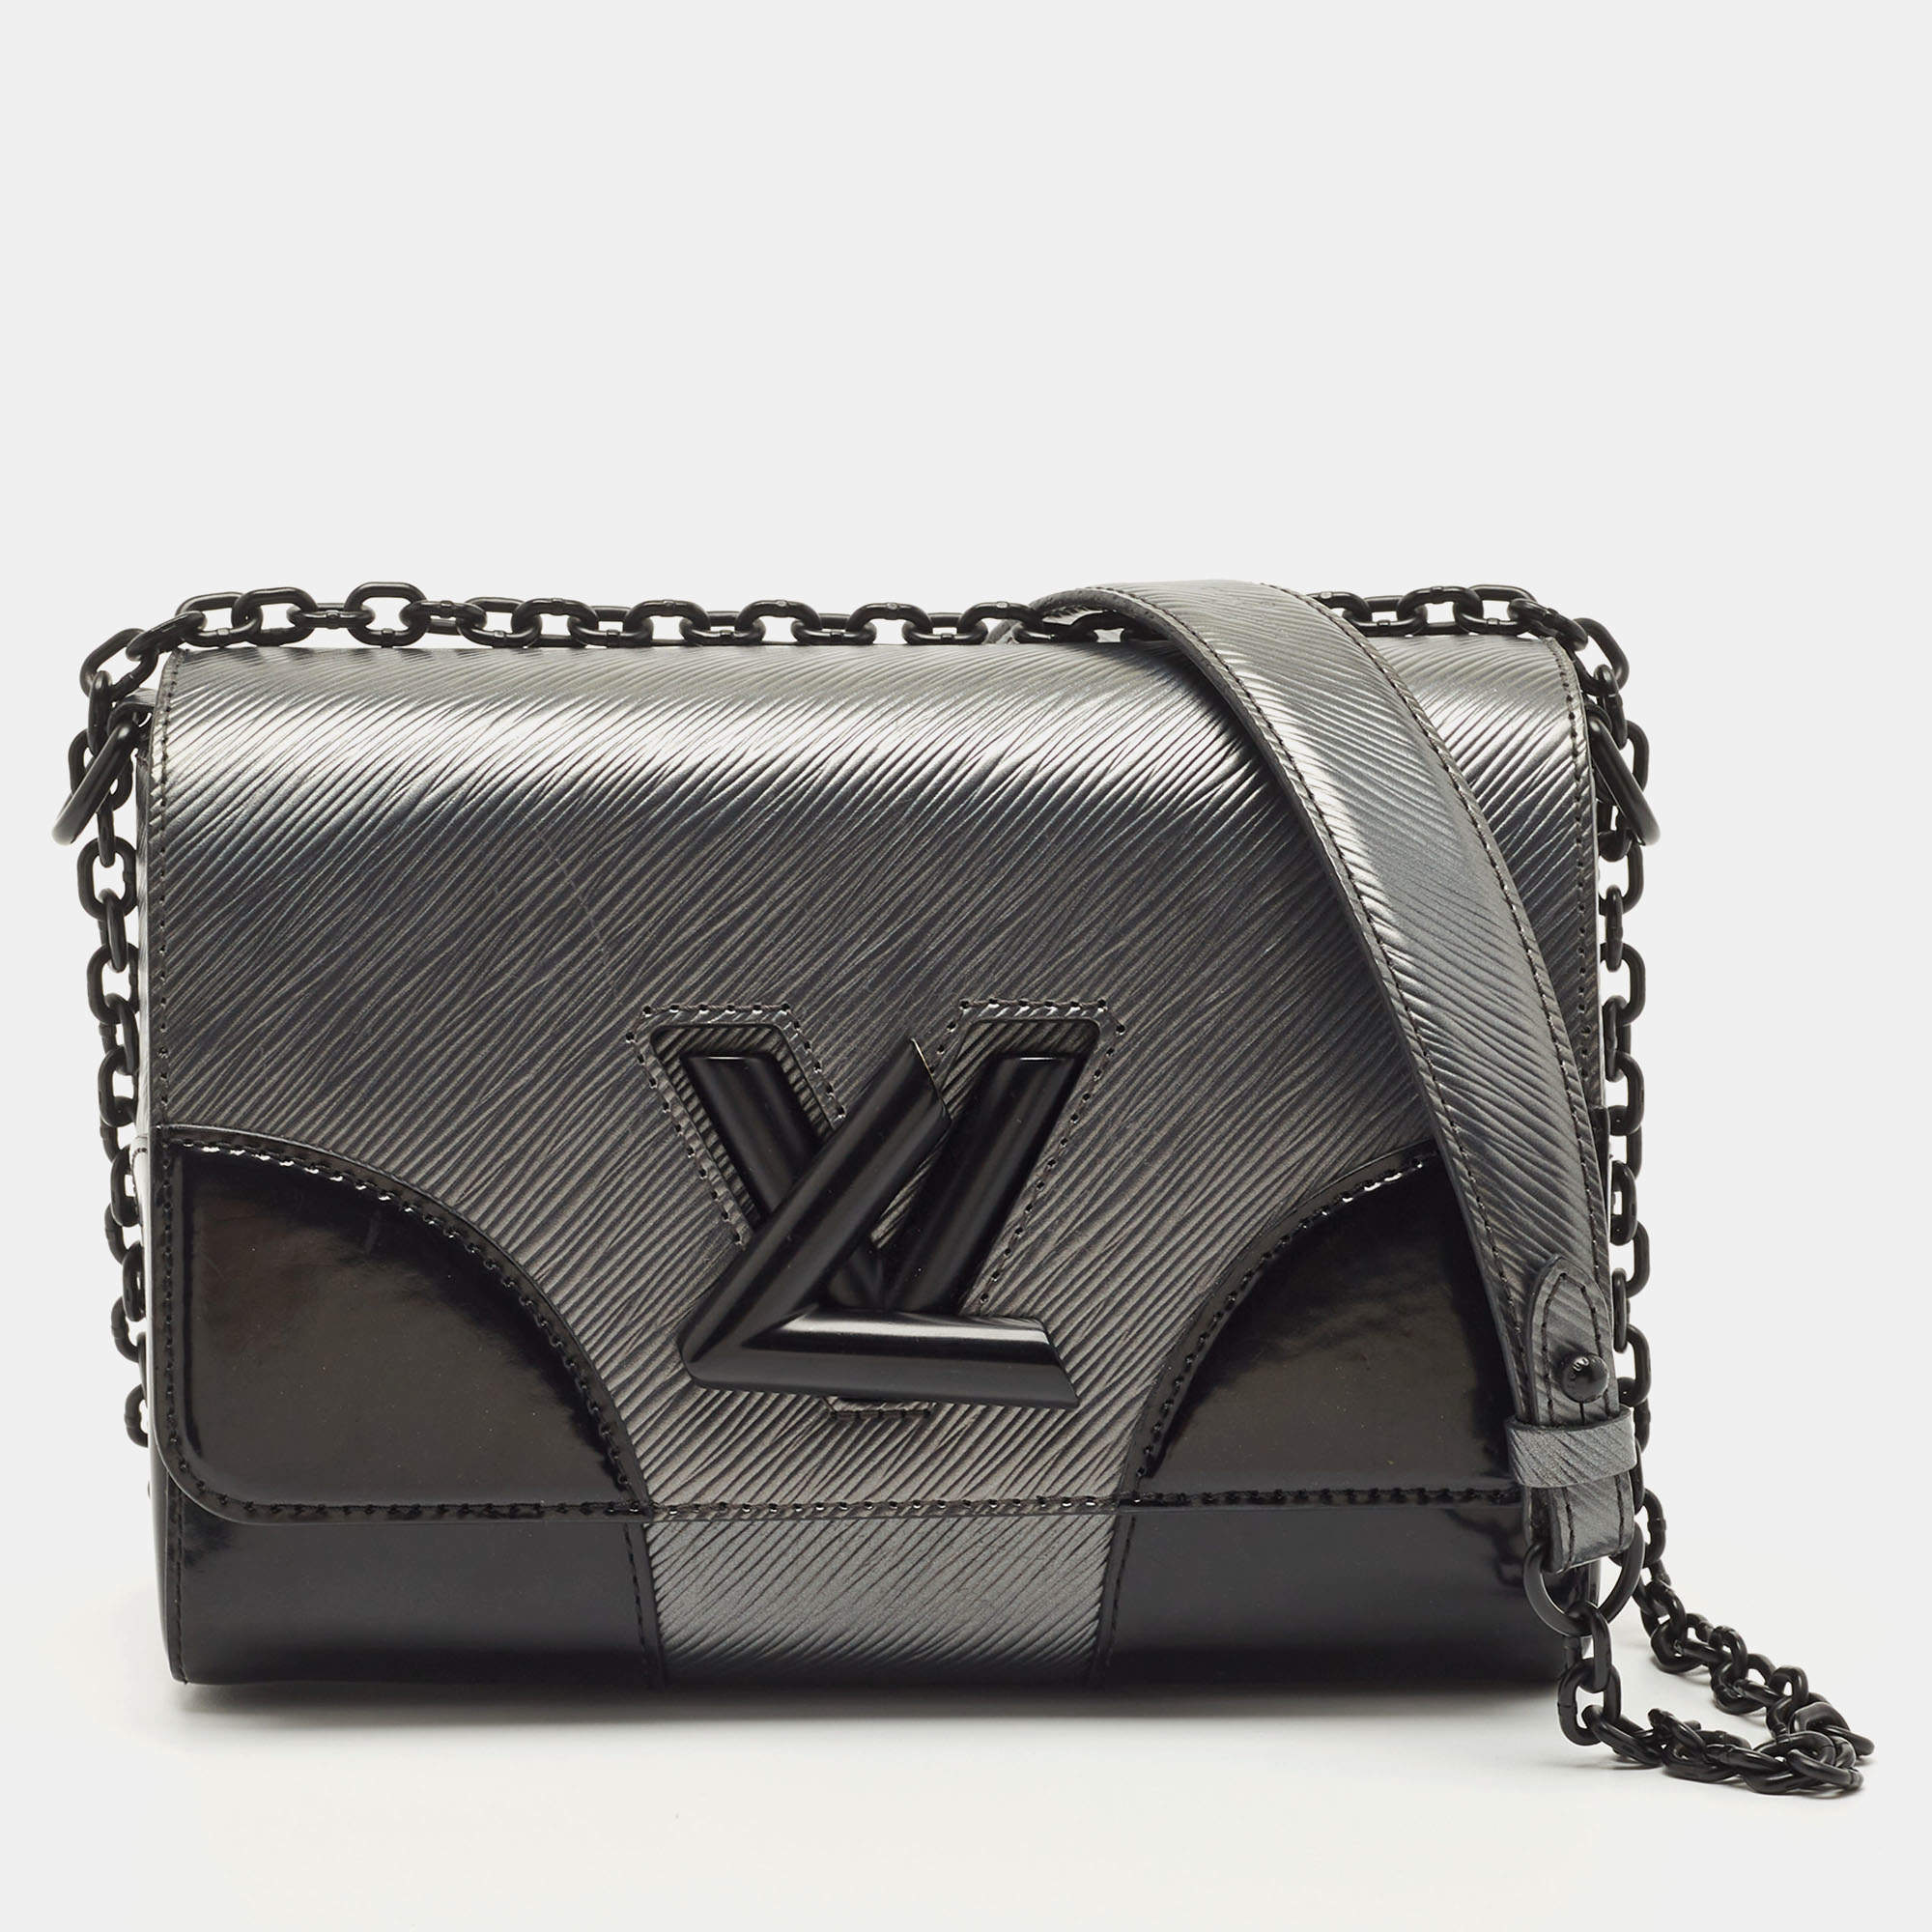 Louis Vuitton Black Epi Leather Twist Wallet on Chain Bag